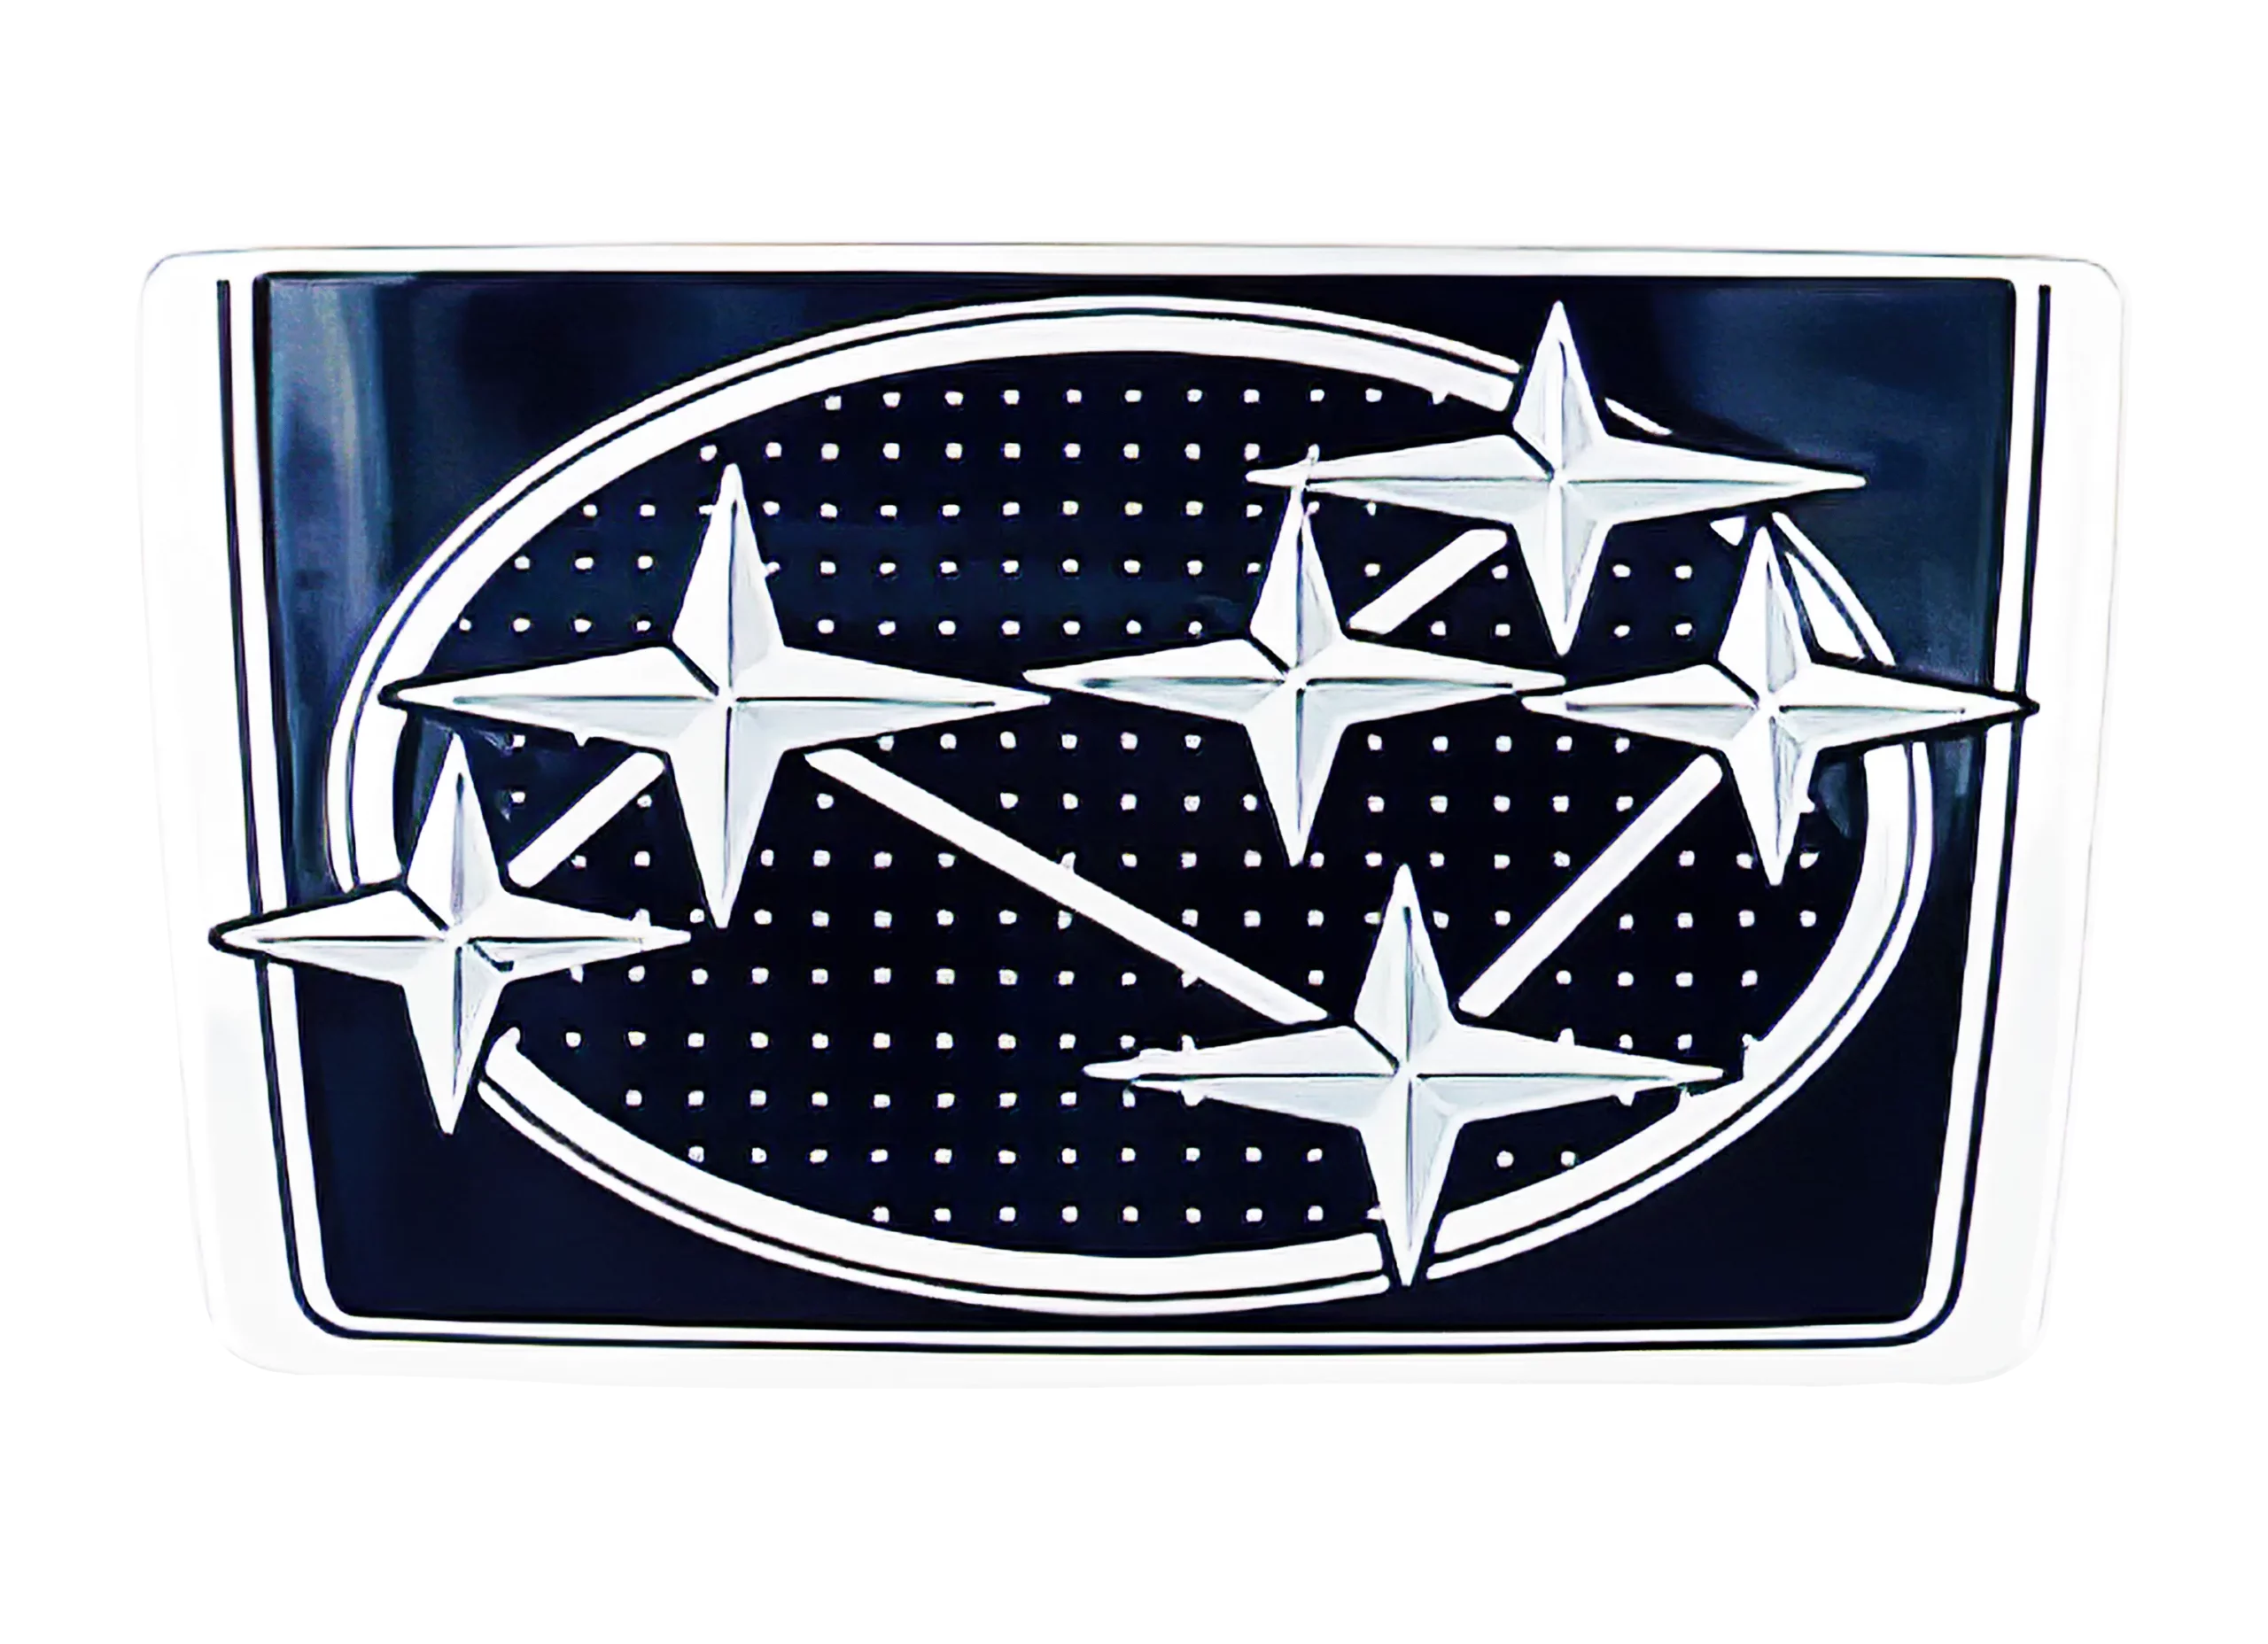 Subaru logo 1970-1980